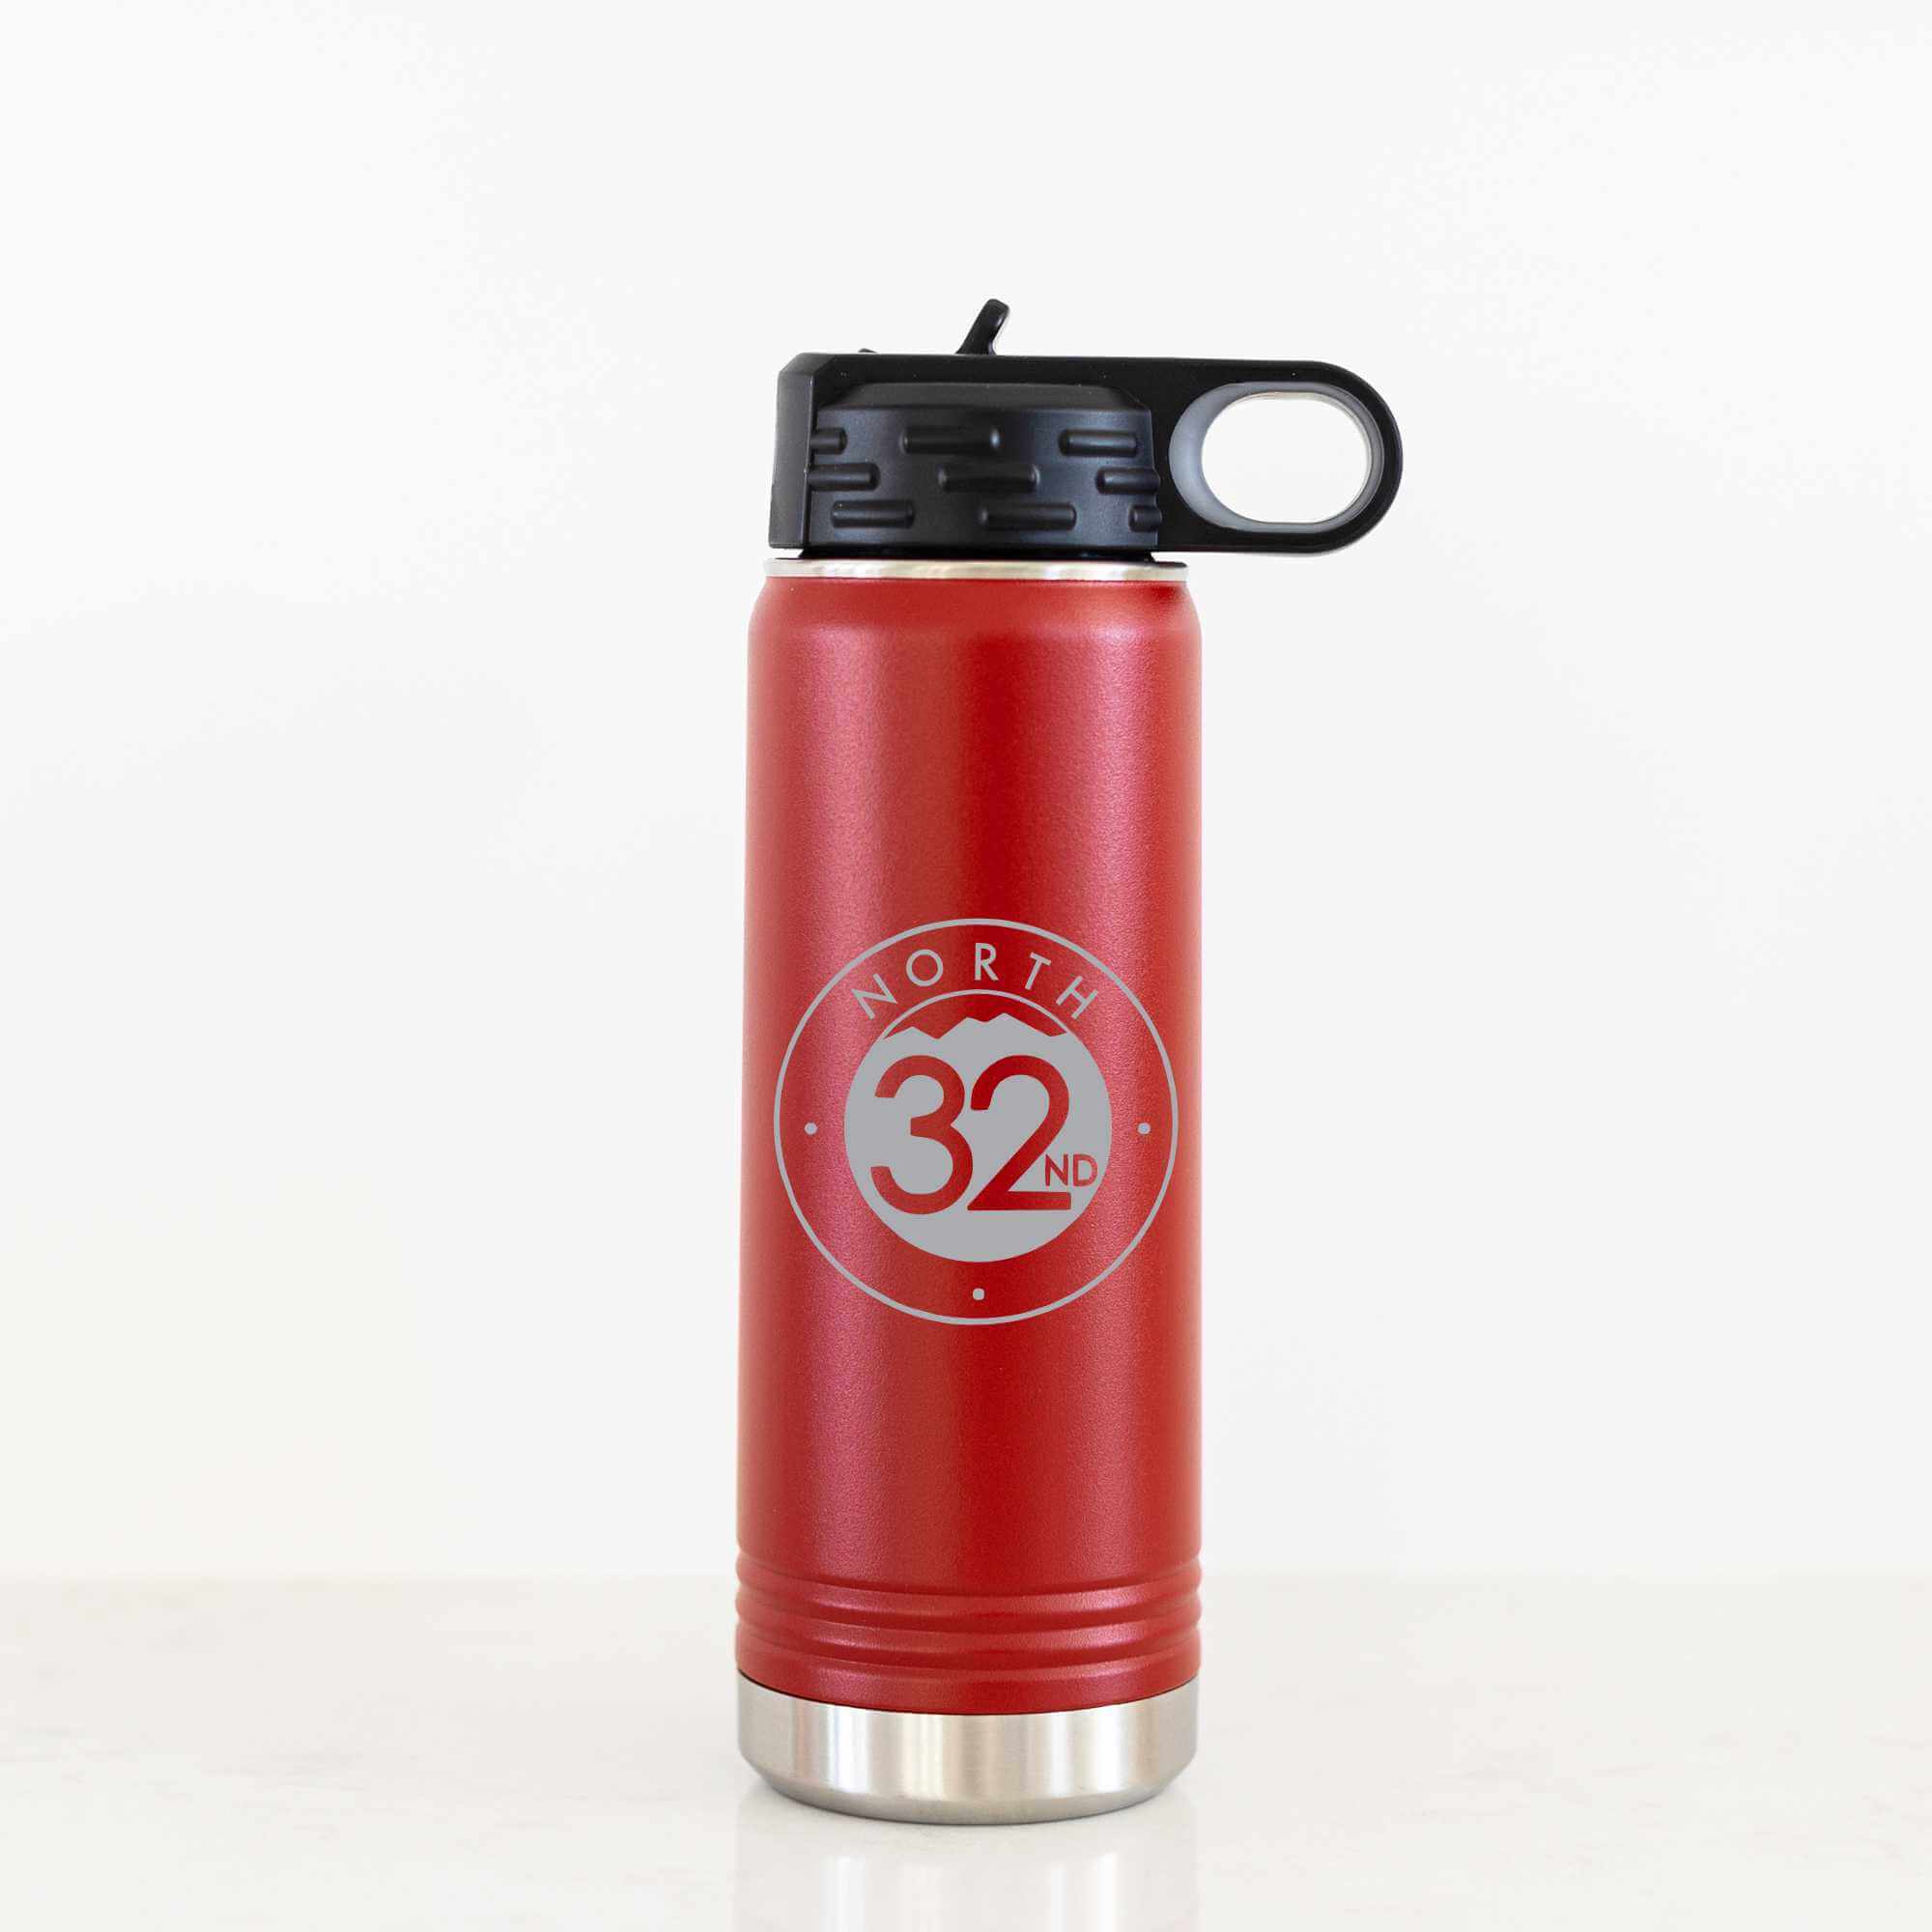 Steel Water Bottle with Business Logo - 20 oz